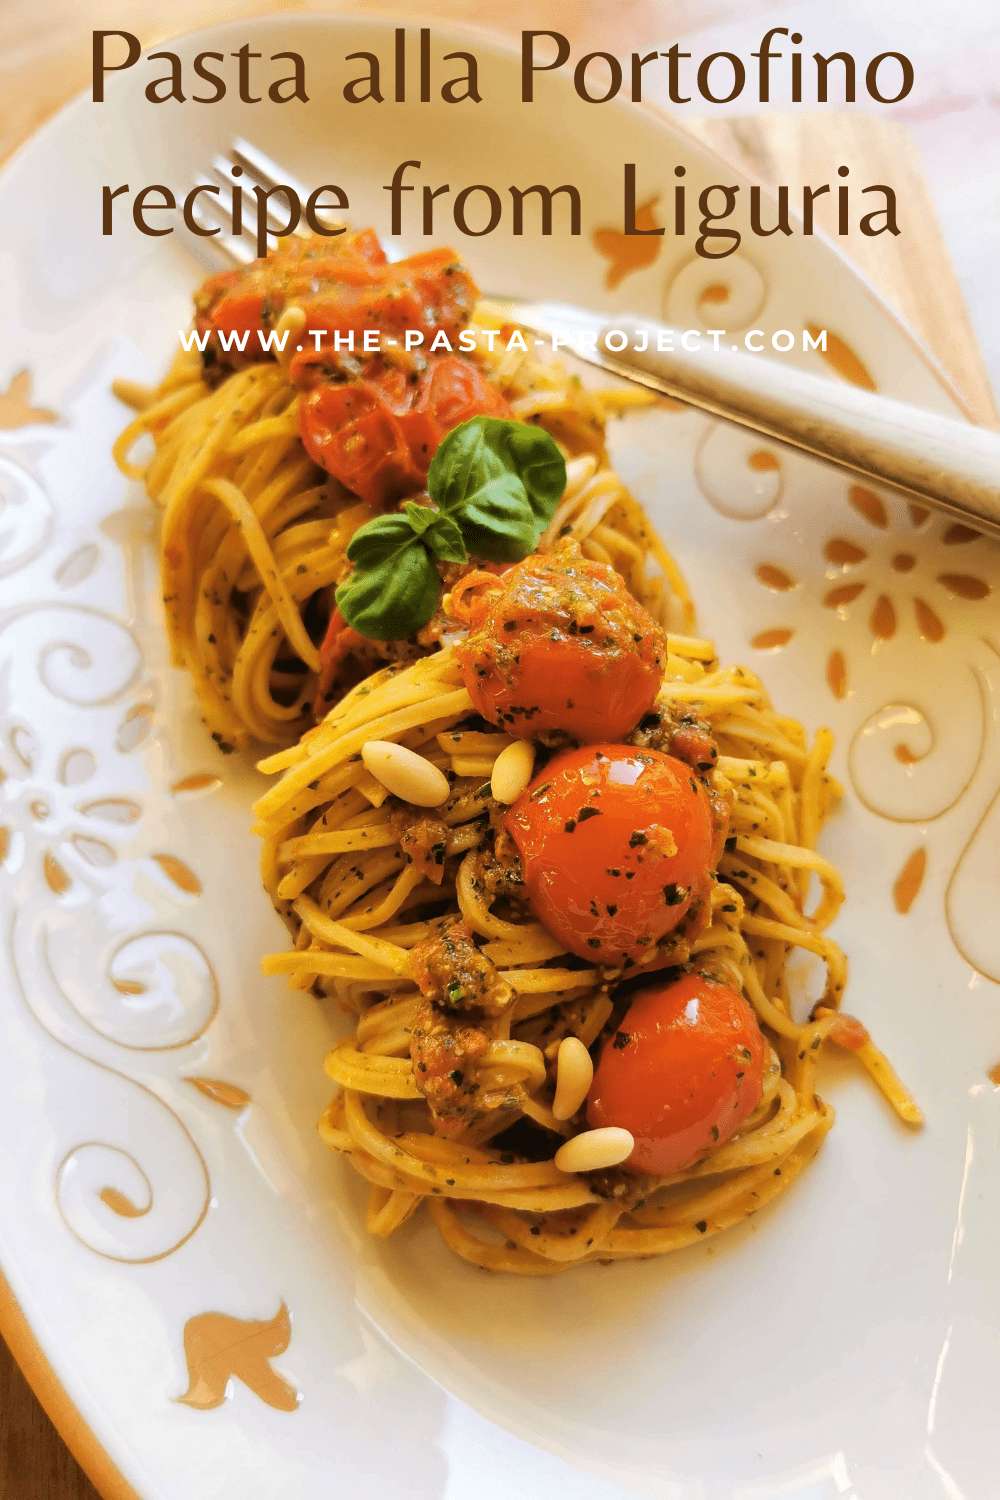 Pasta Portofino recipe from Liguria.